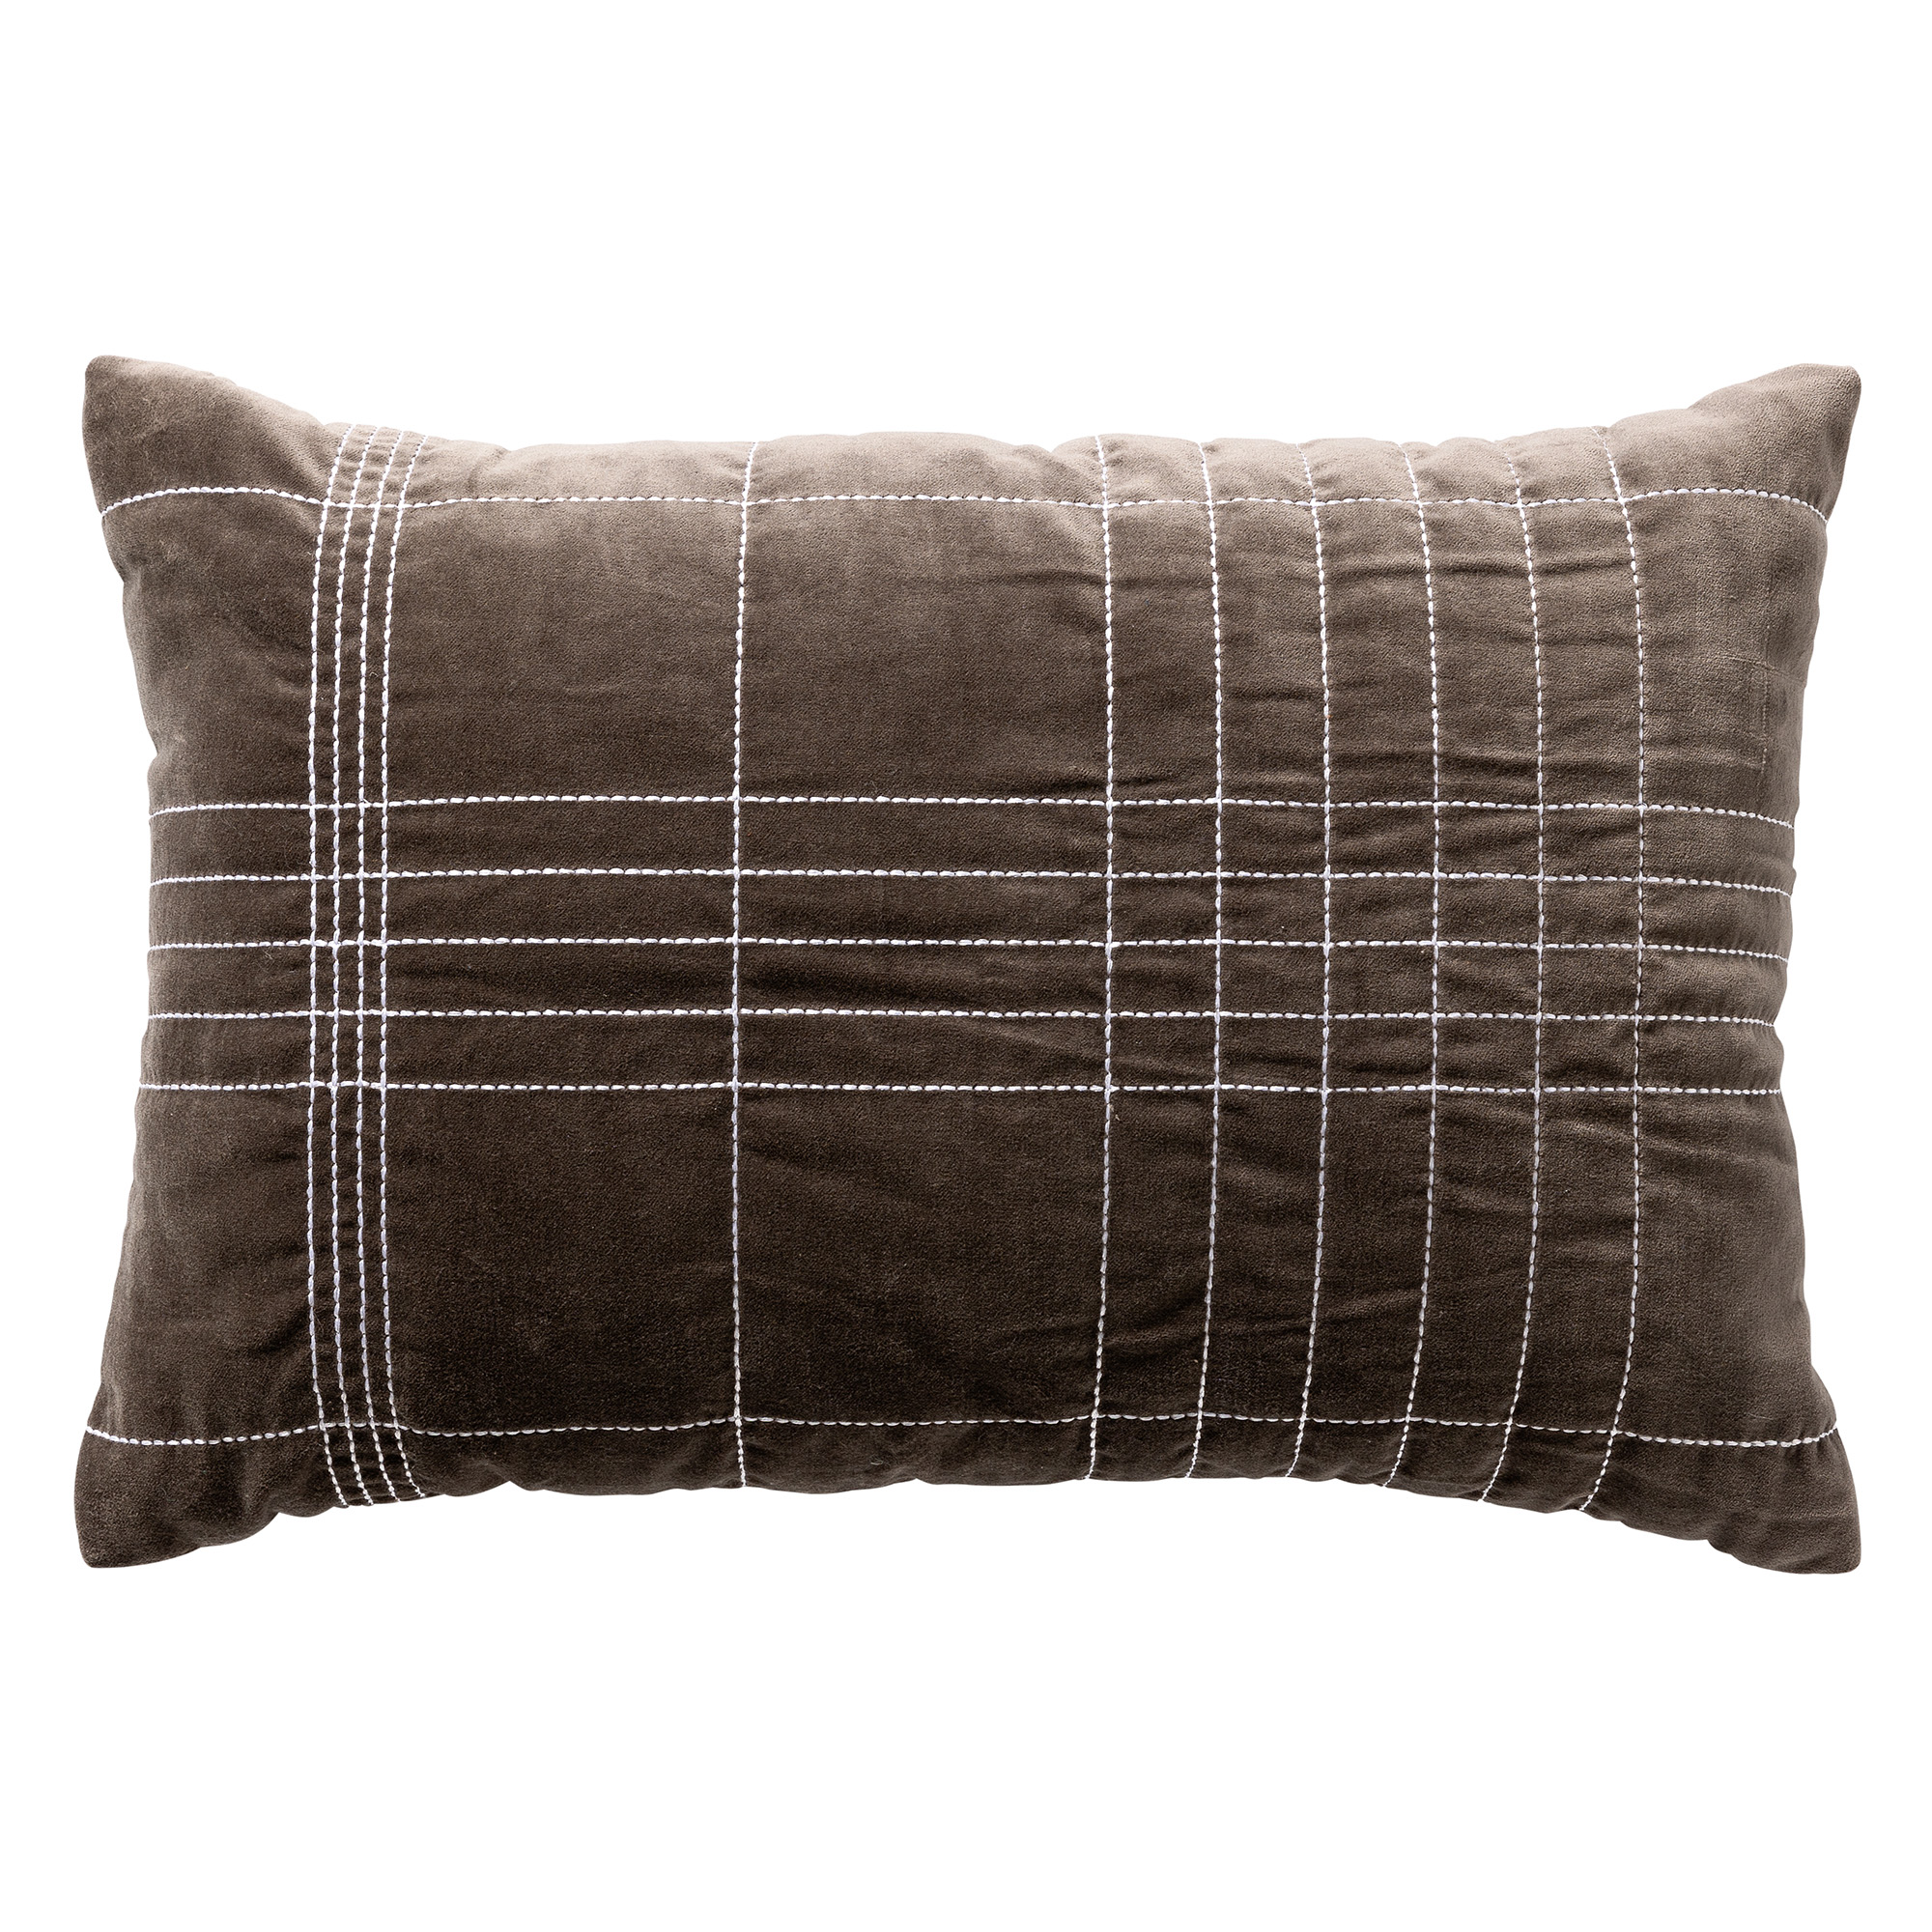 SELAH - Kussenhoes 40x60 cm - velvet – subtiel ruitpatroon - Charcoal Gray - antraciet